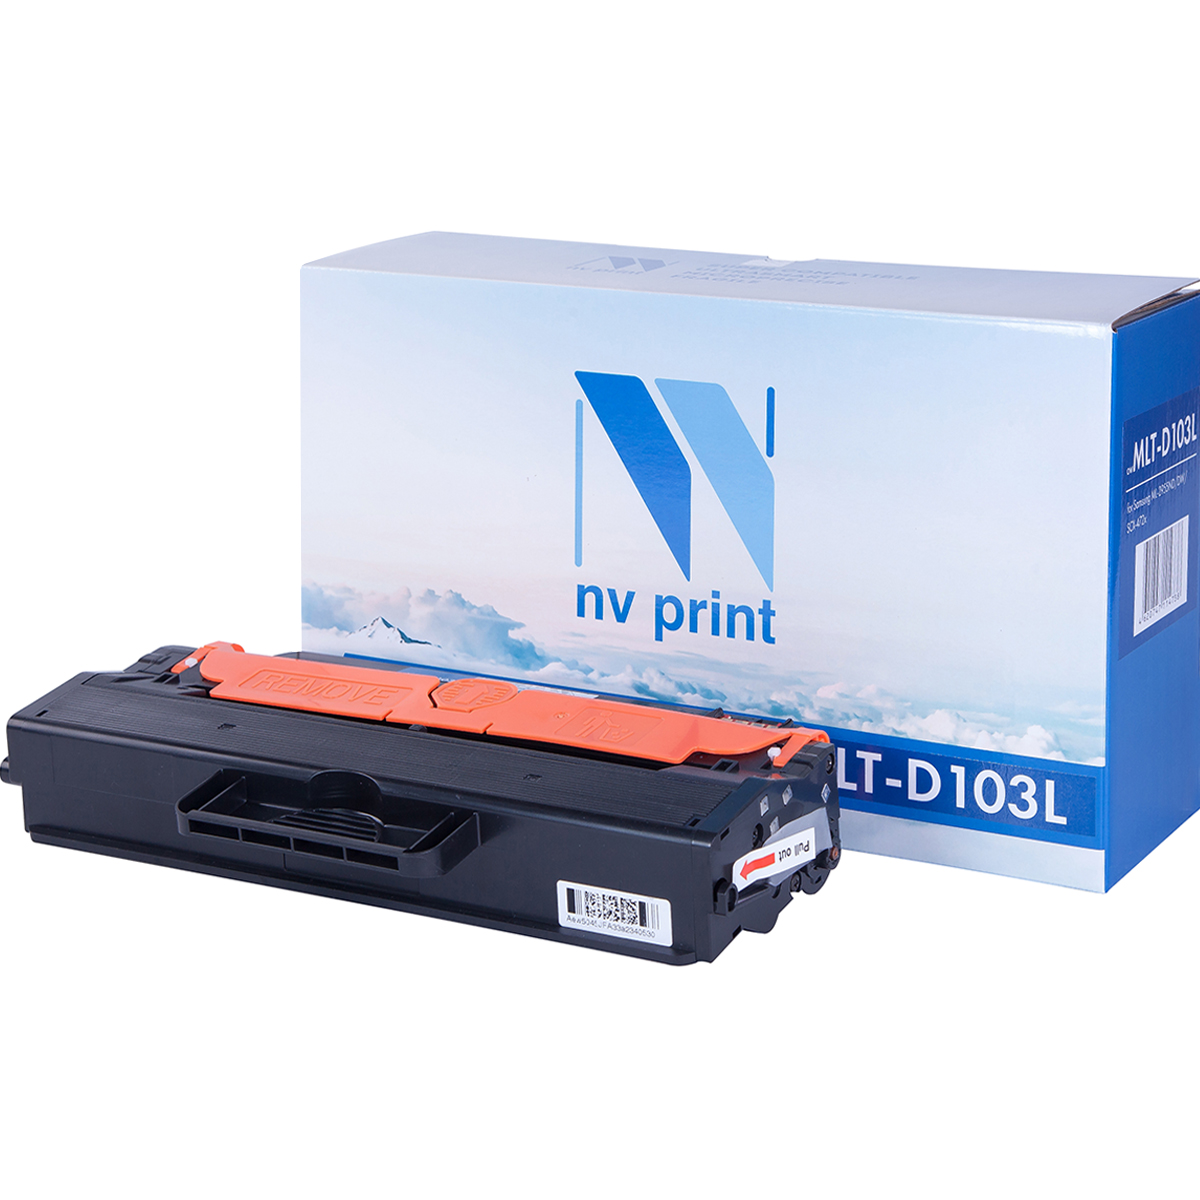 Картридж NV Print MLT-D101S для Samsung SCX 3400/ML 2160 (1500k) цена и фото